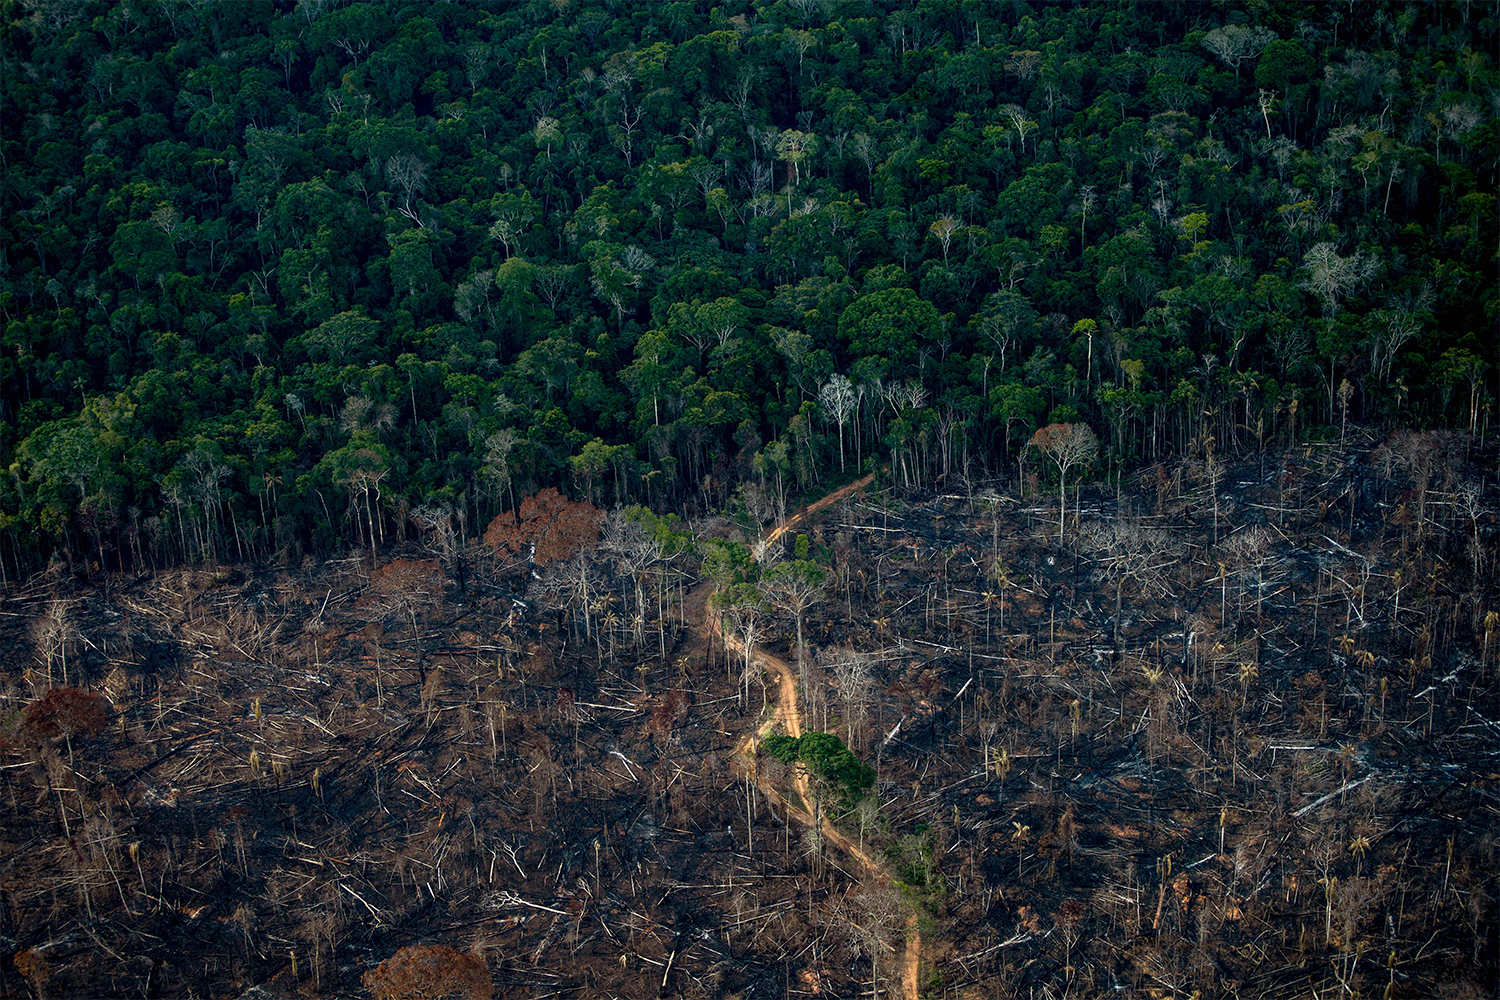 https://www.insidehook.com/wp-content/uploads/2022/02/deforested-amazon-rainforest.jpg